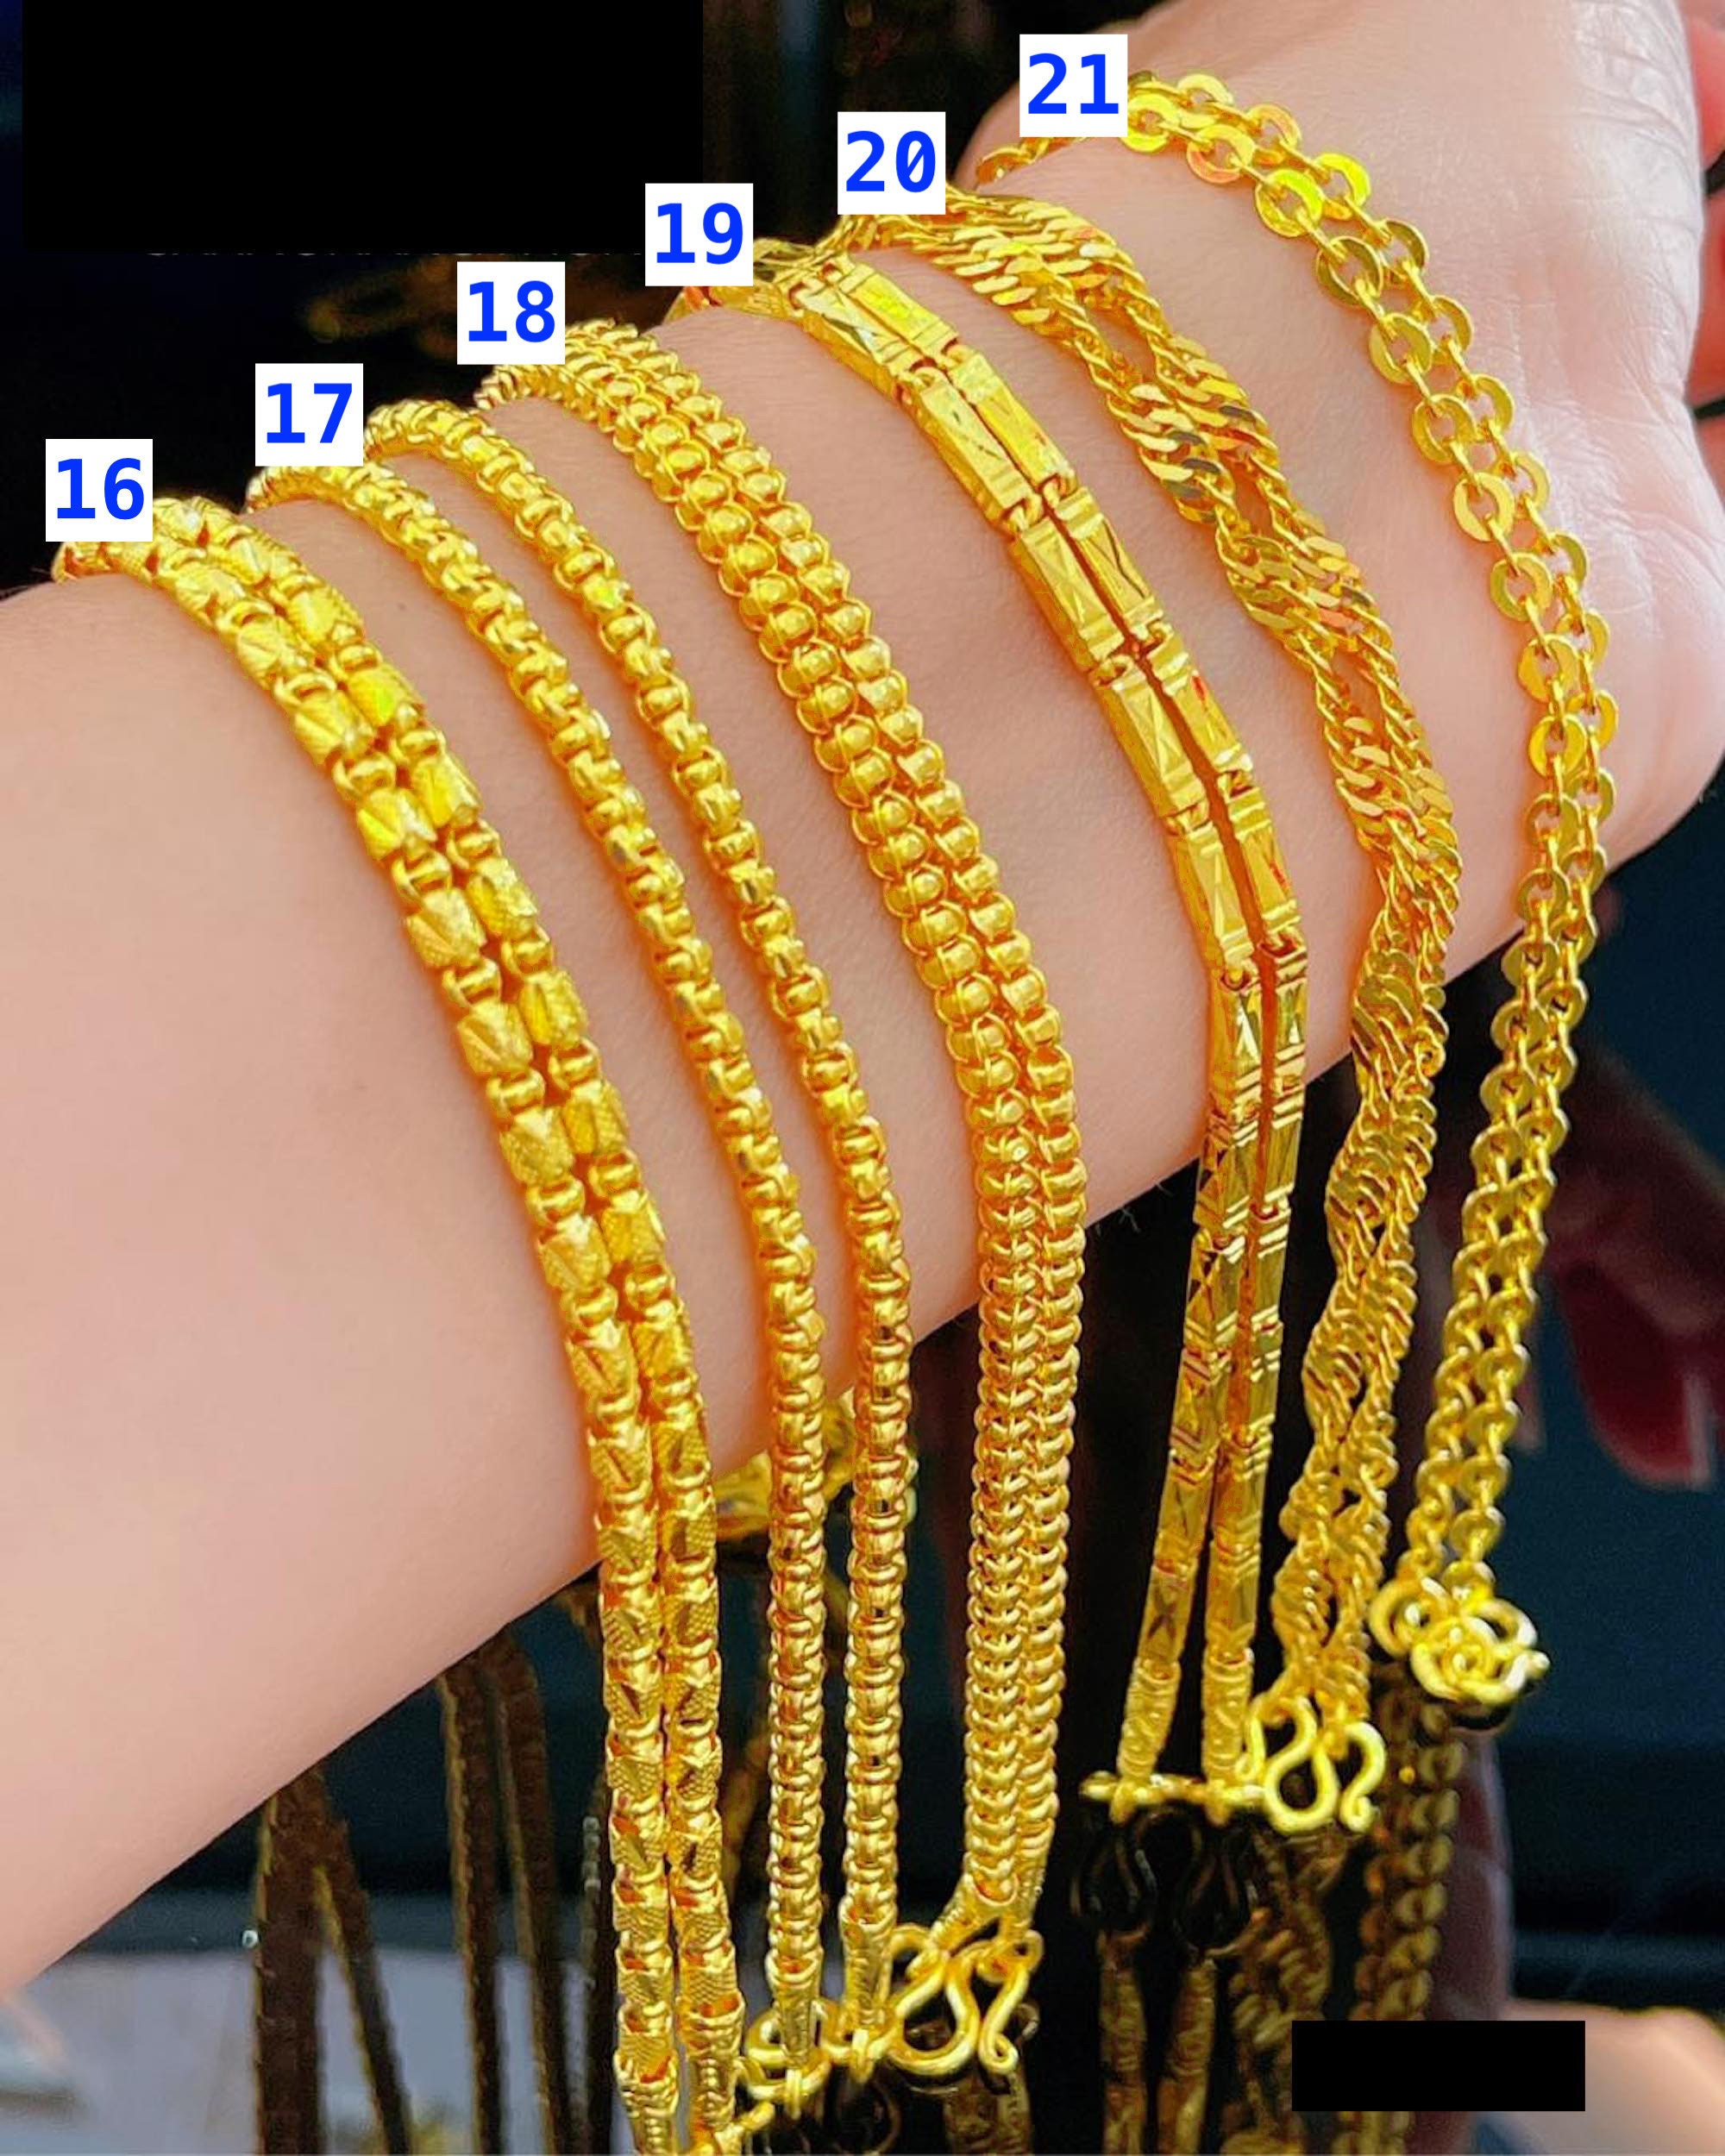 Solid 10k Yellow Gold 15 gram 6-mm Cuban Link Chain Bracelet (8-8.5